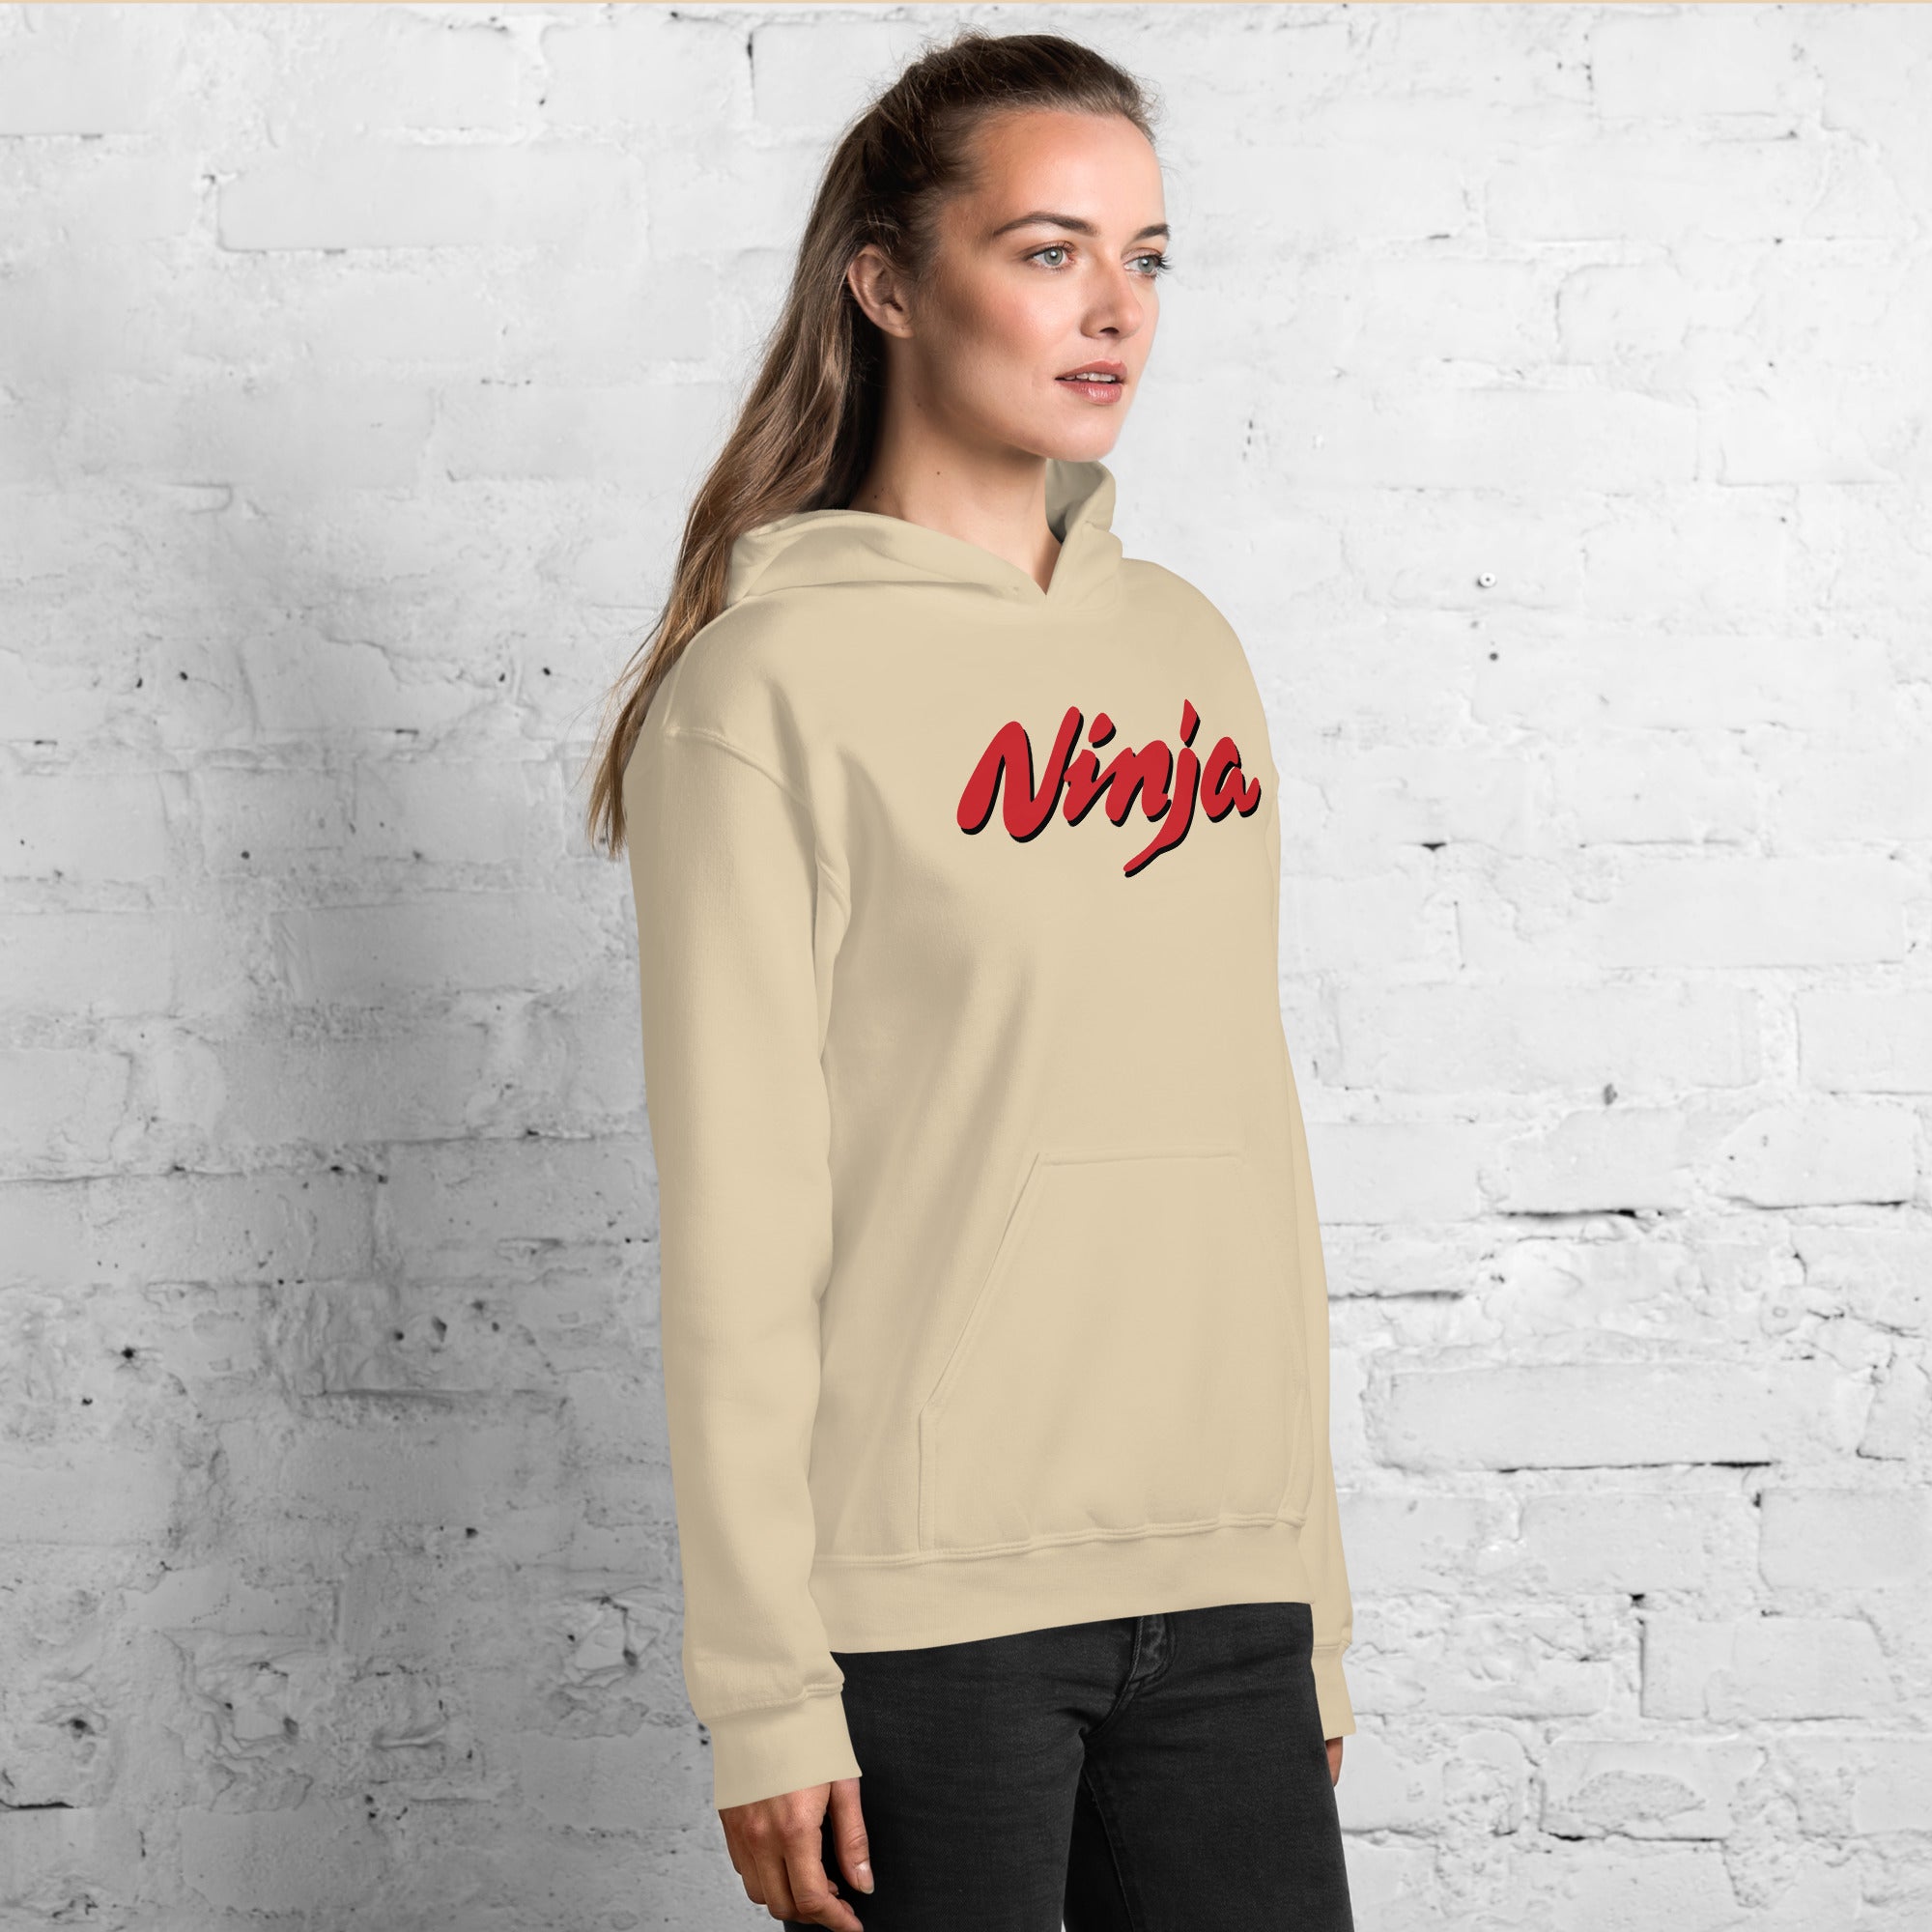 Ninja Hoodie & Hooded Sweatshirt for Women